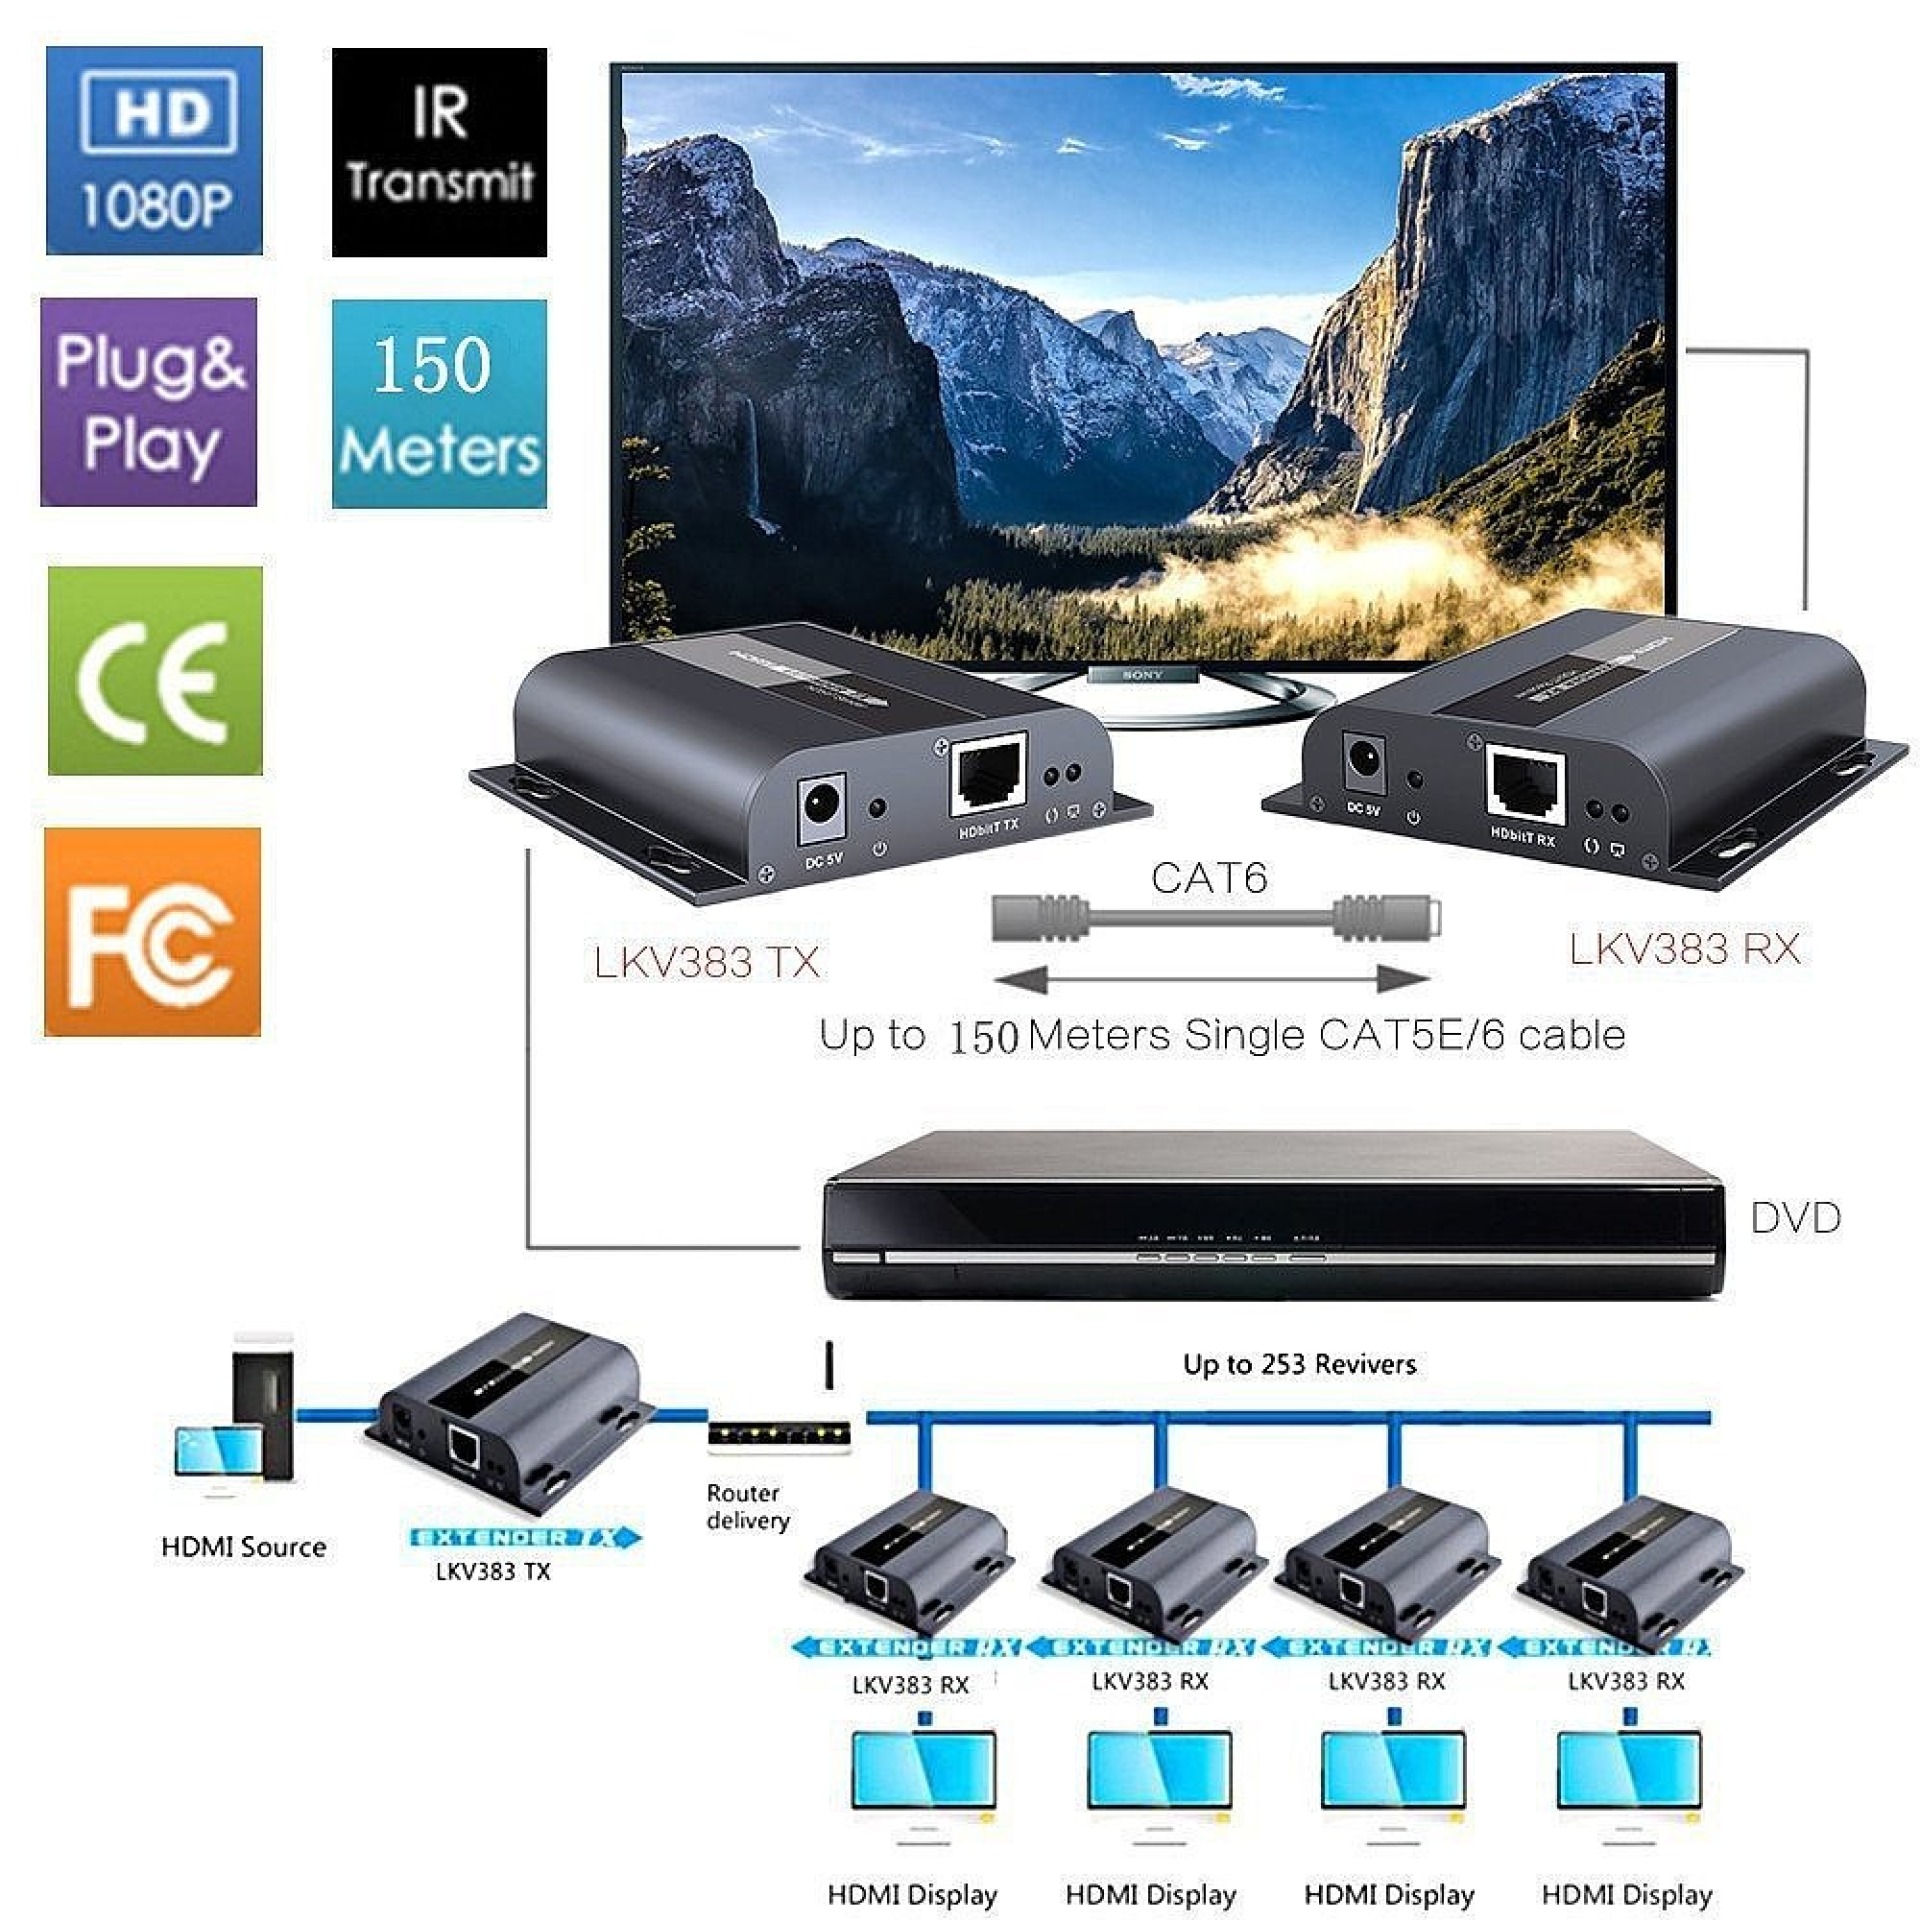 HDBitT HDMI Zusätzlicher Empfänger